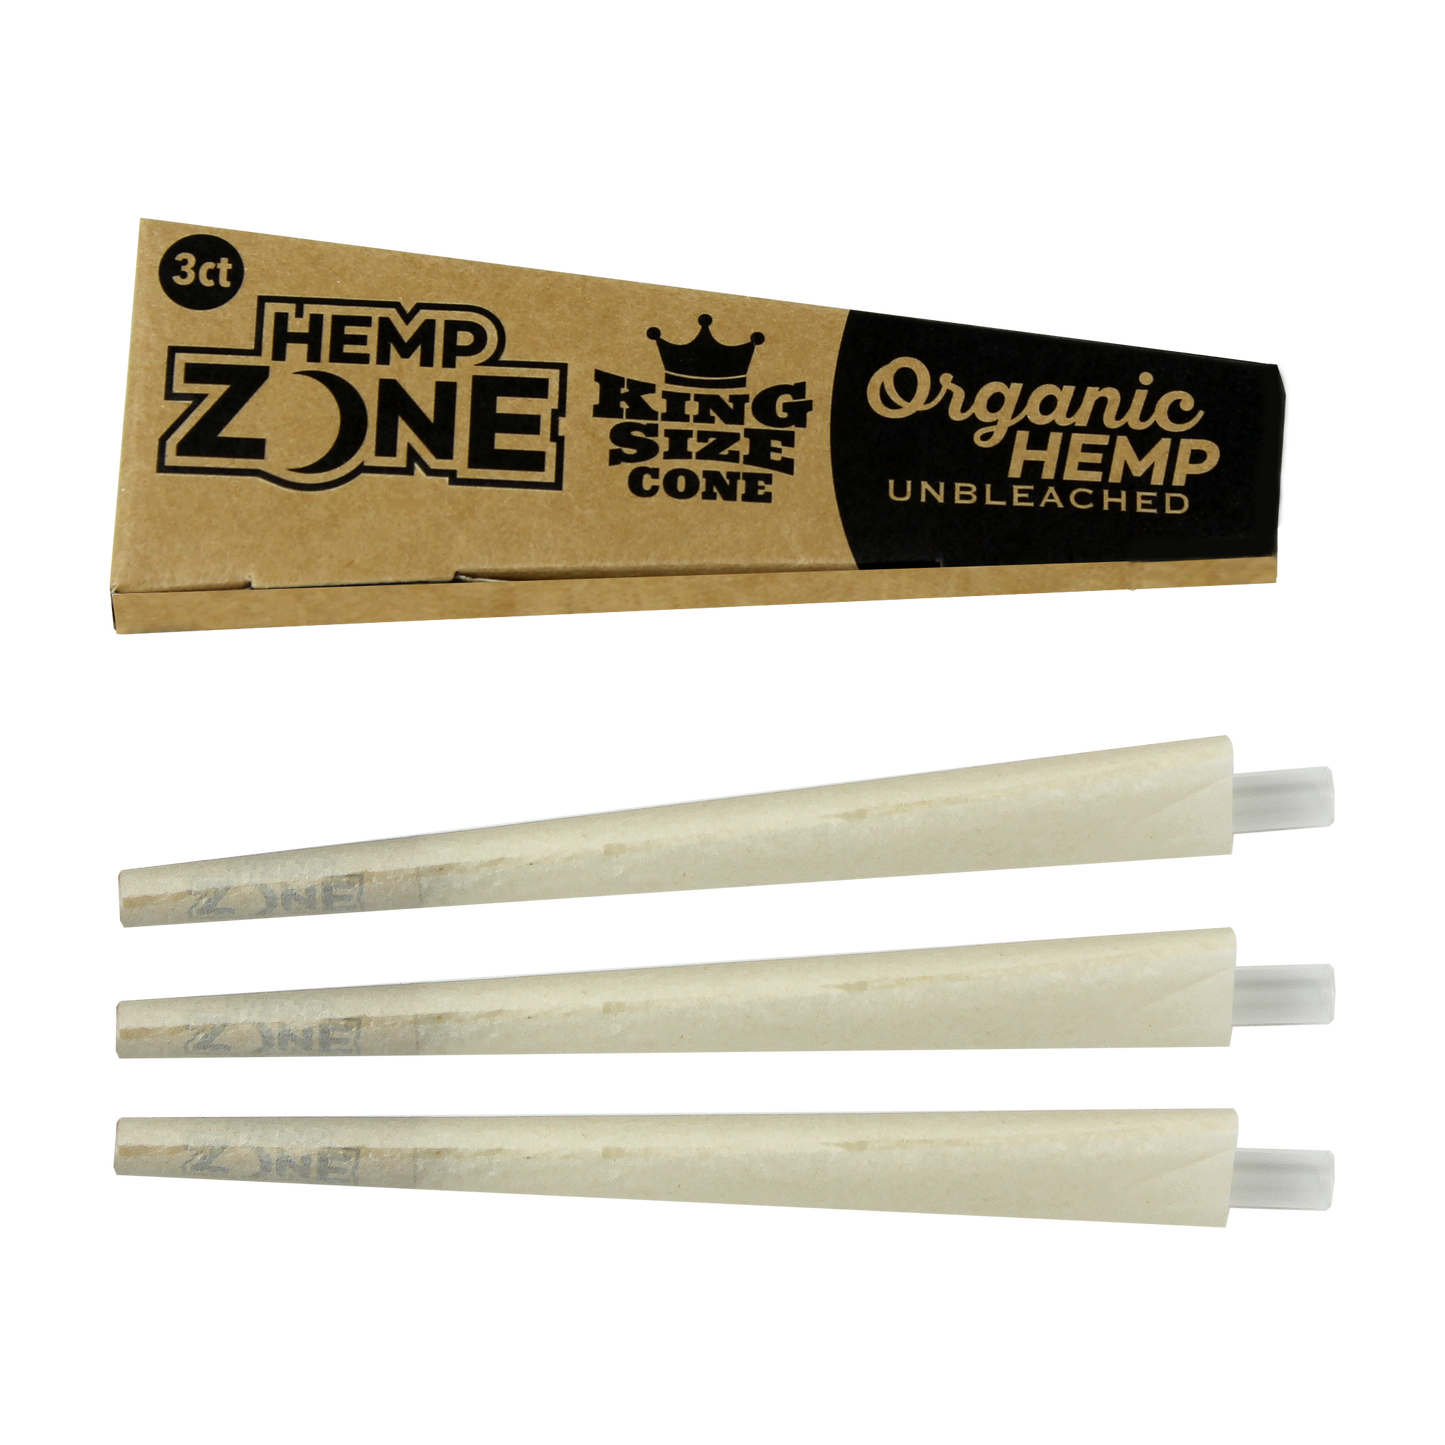 Hemp Zone: King Size Organic Hemp Cones Unbleached